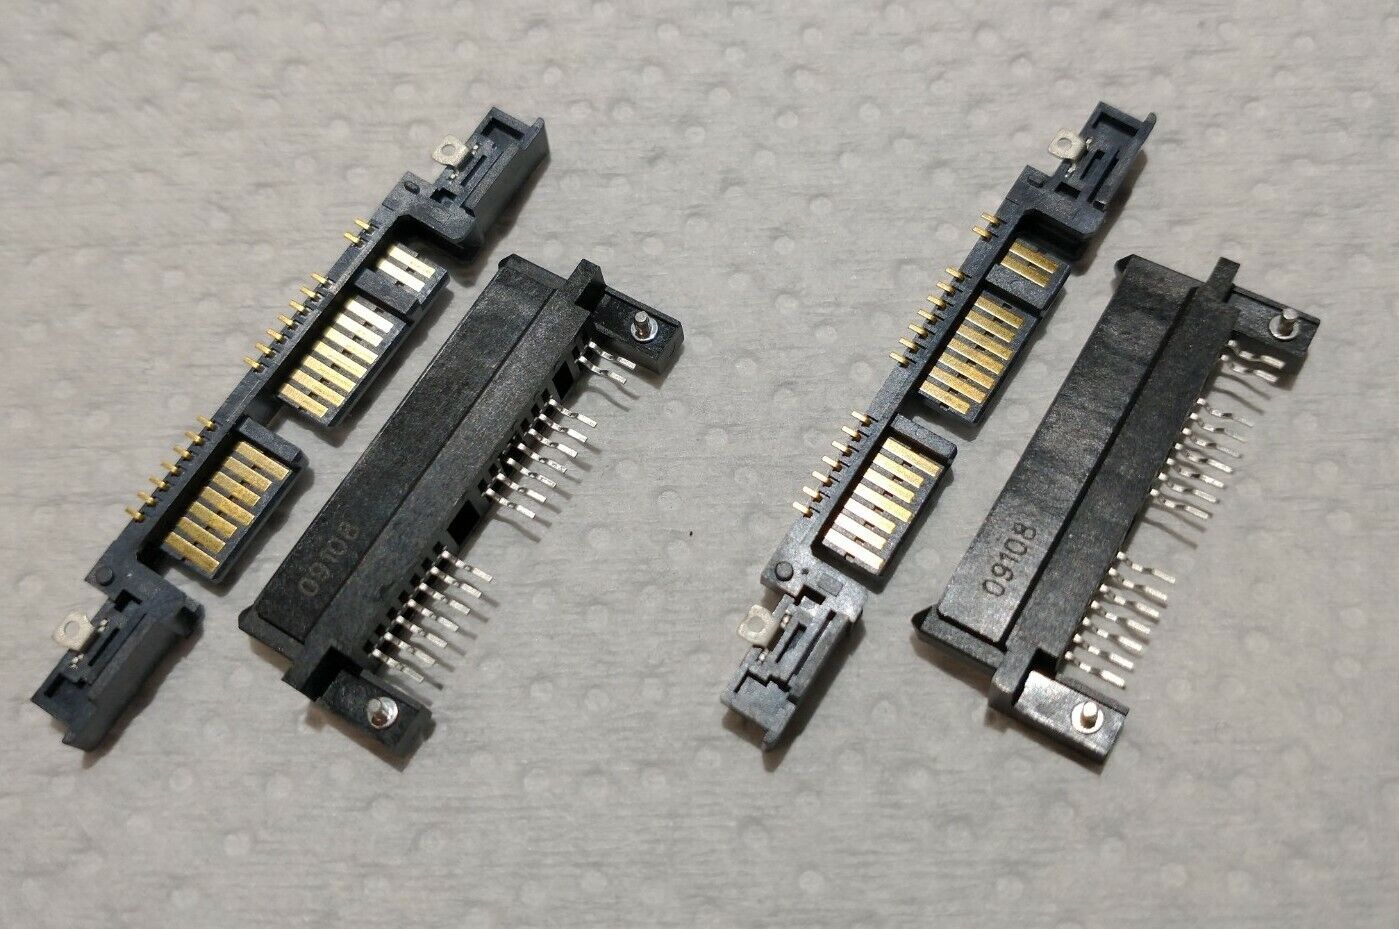 2 Pcs SATA 15 pin power & data PCB SMT connector  (male+female mating pairs)